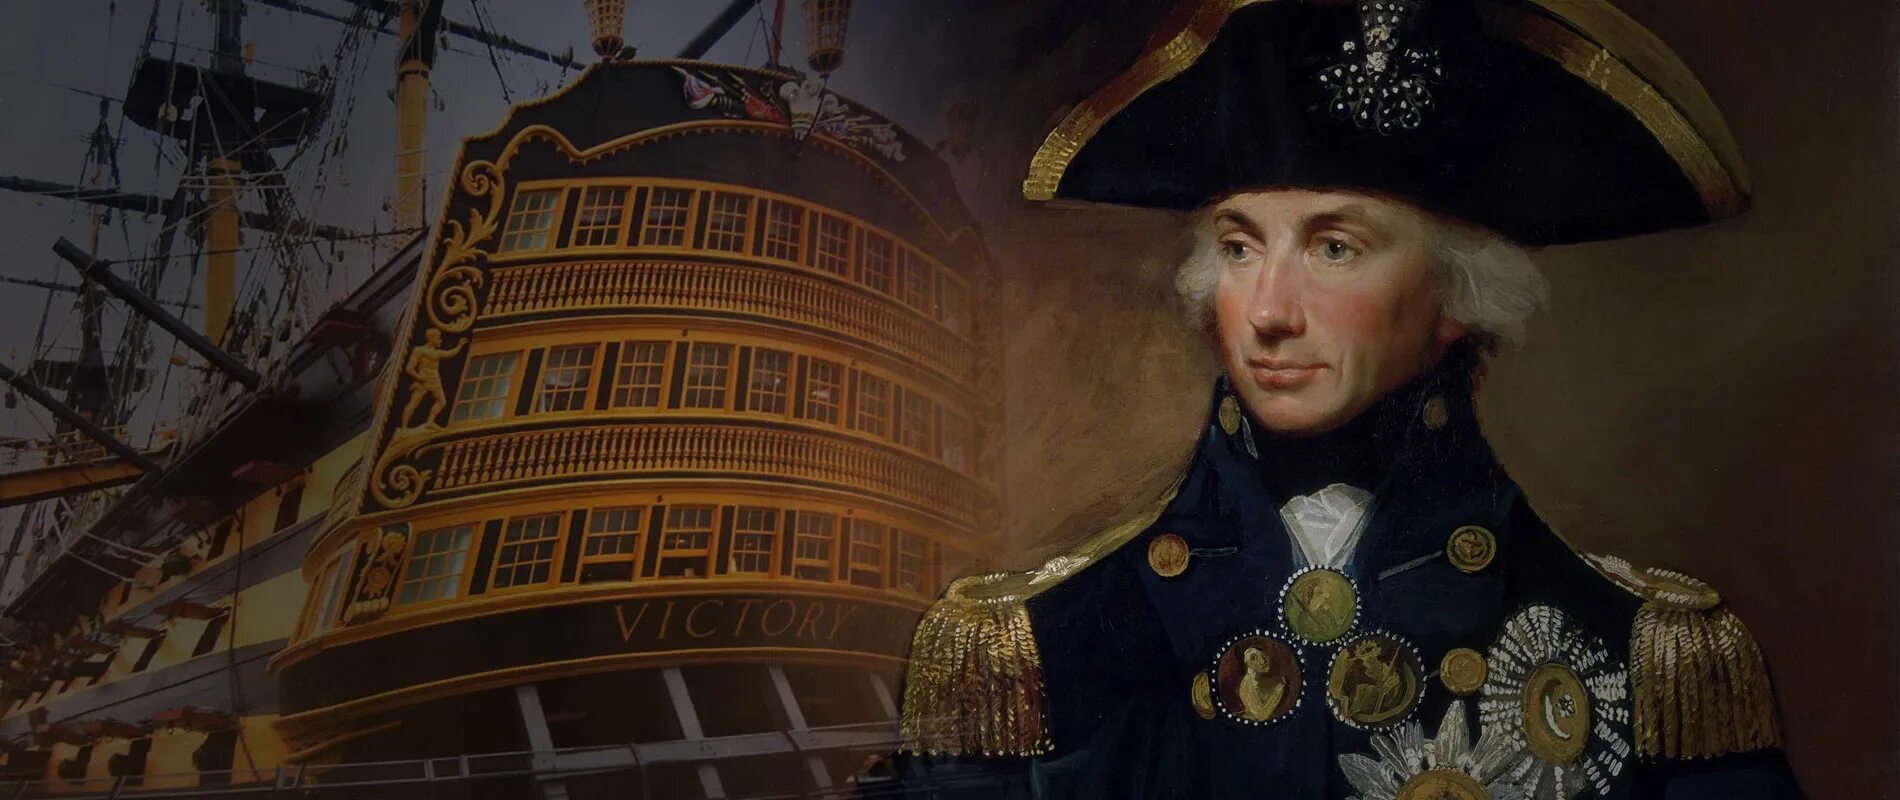 Имя адмирала нельсона 7 букв. Адмирал Горацио Нельсон. Портрет вице-Адмирал Горацио Нельсон. Адмирал Нельсон Англия. Адмирал Нельсон одноглазый.